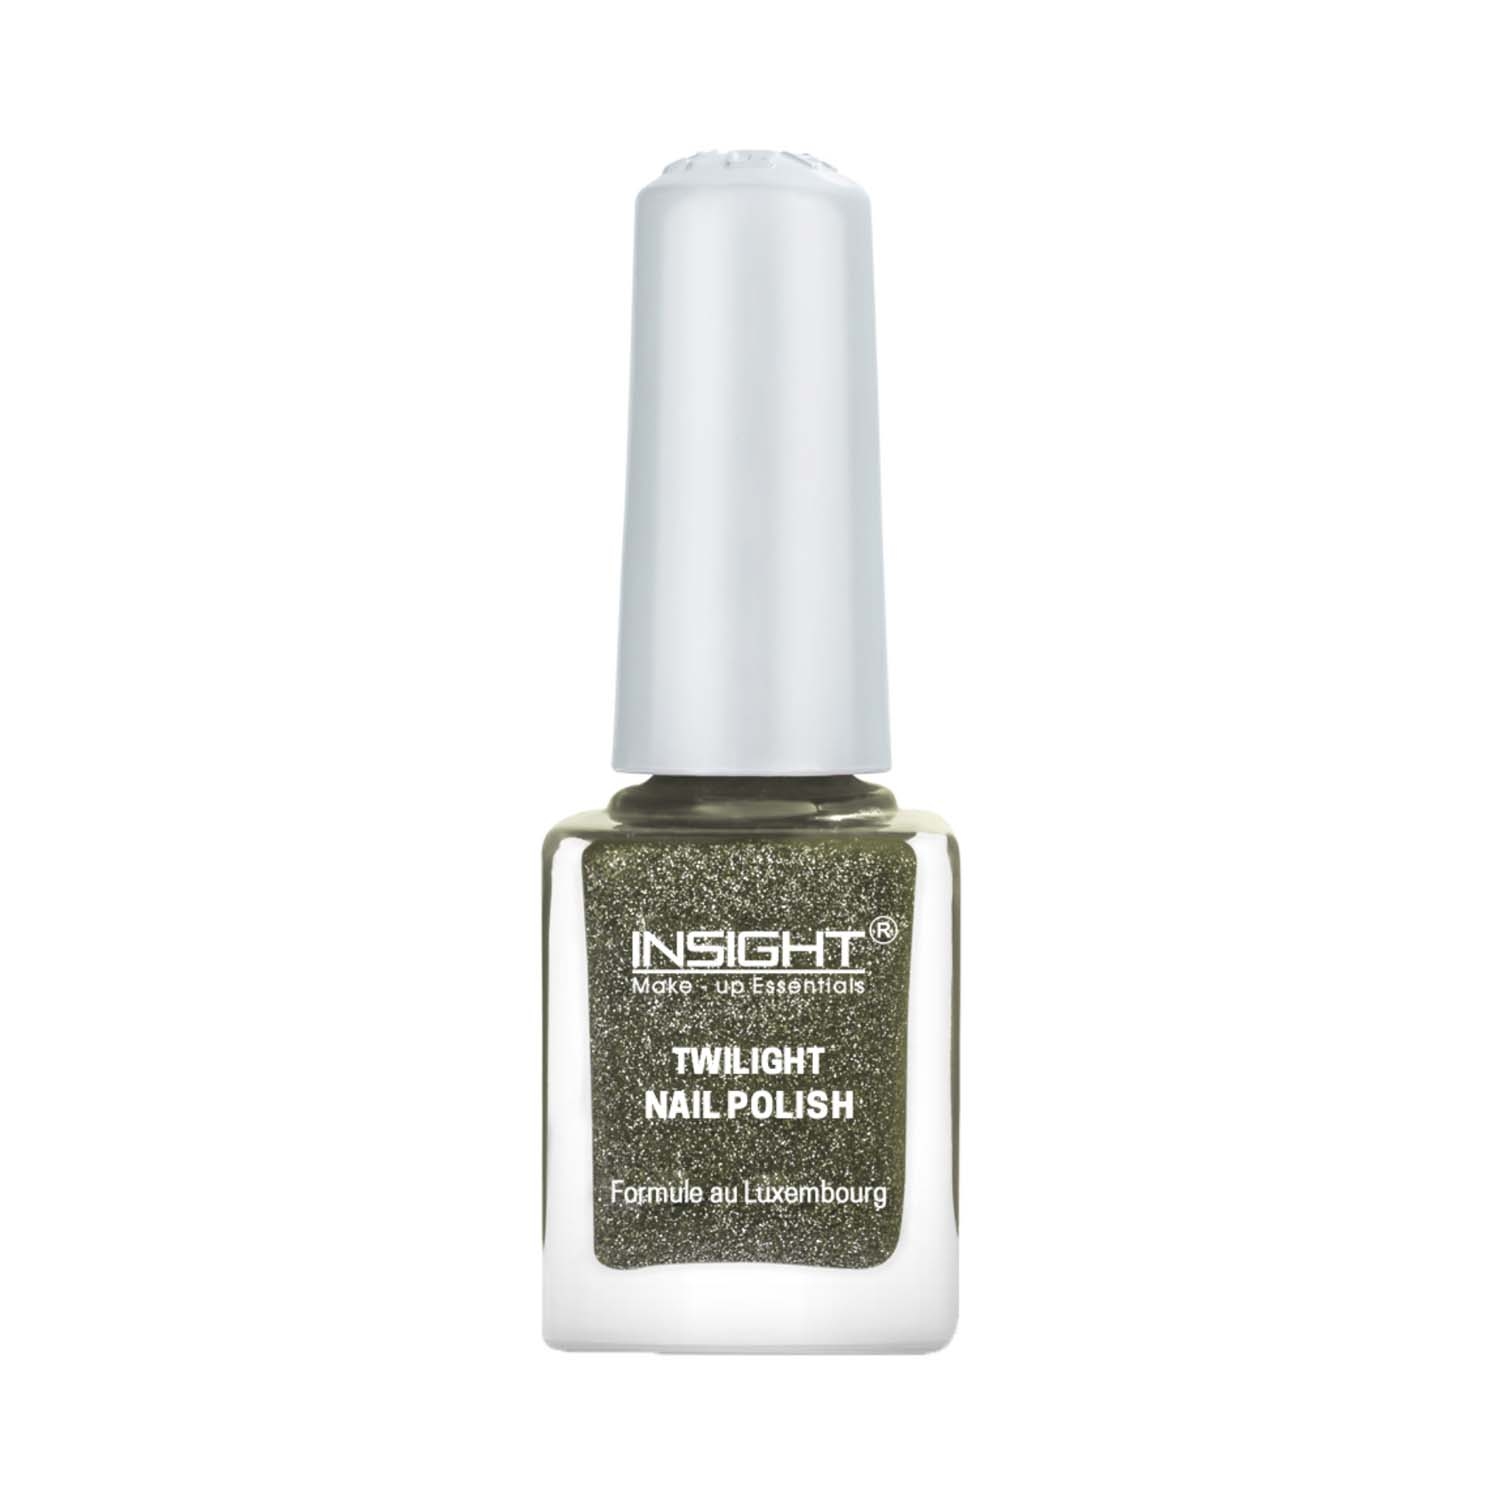 Insight Cosmetics | Insight Cosmetics Twilight Nail Polish - T-10 (12ml)